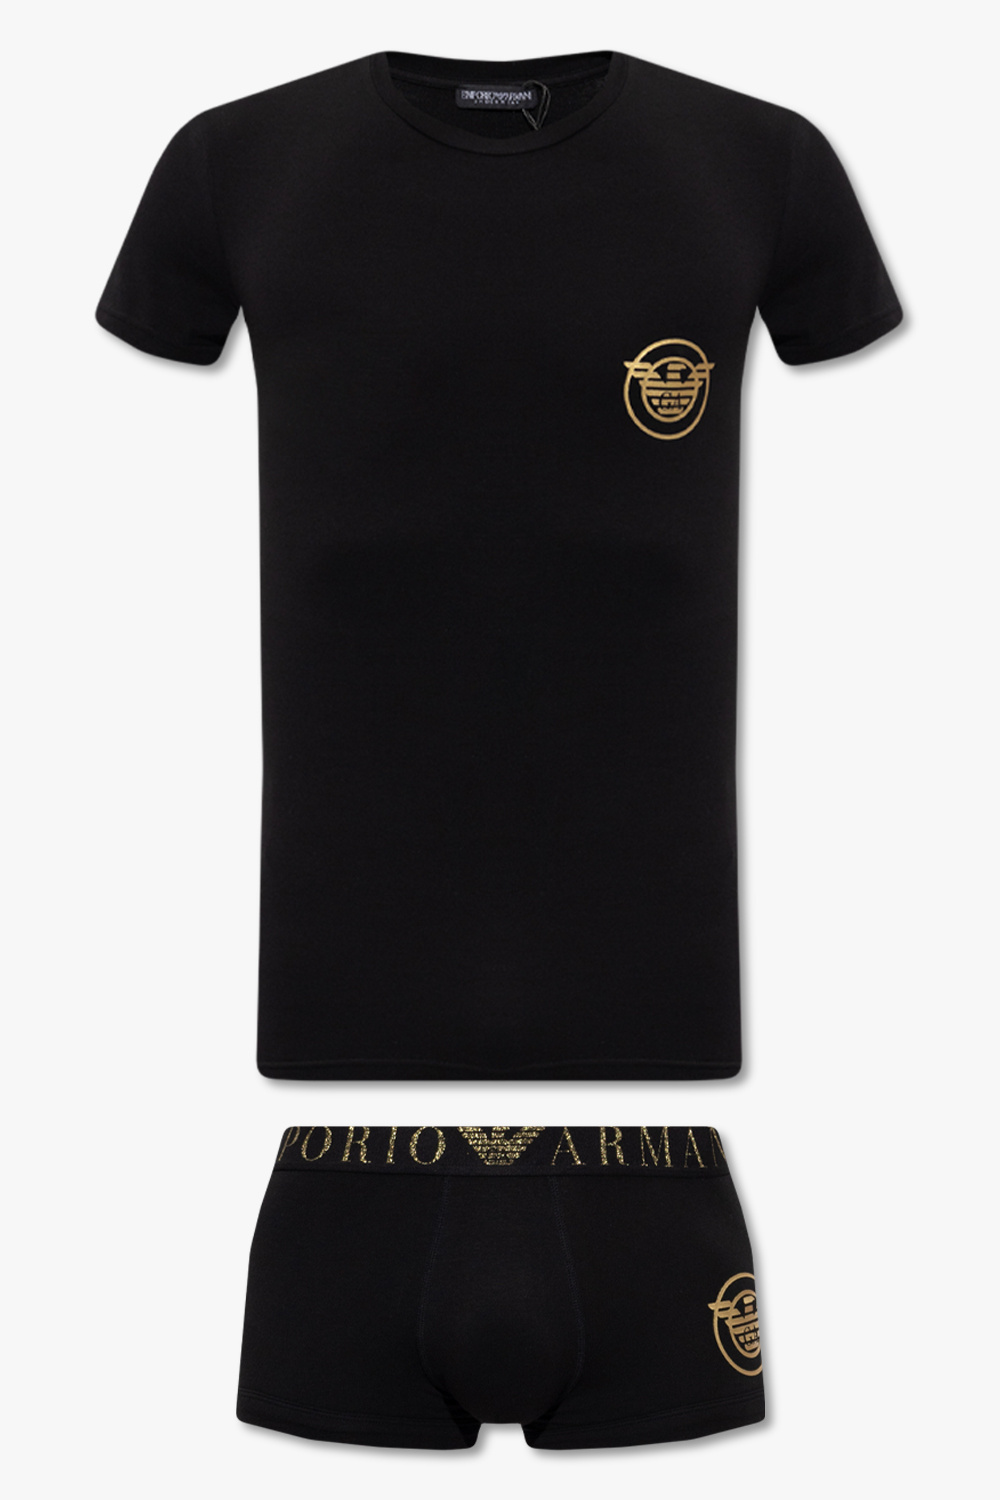 Emporio Armani Giorgio Armani stand collar bib-detail shirt